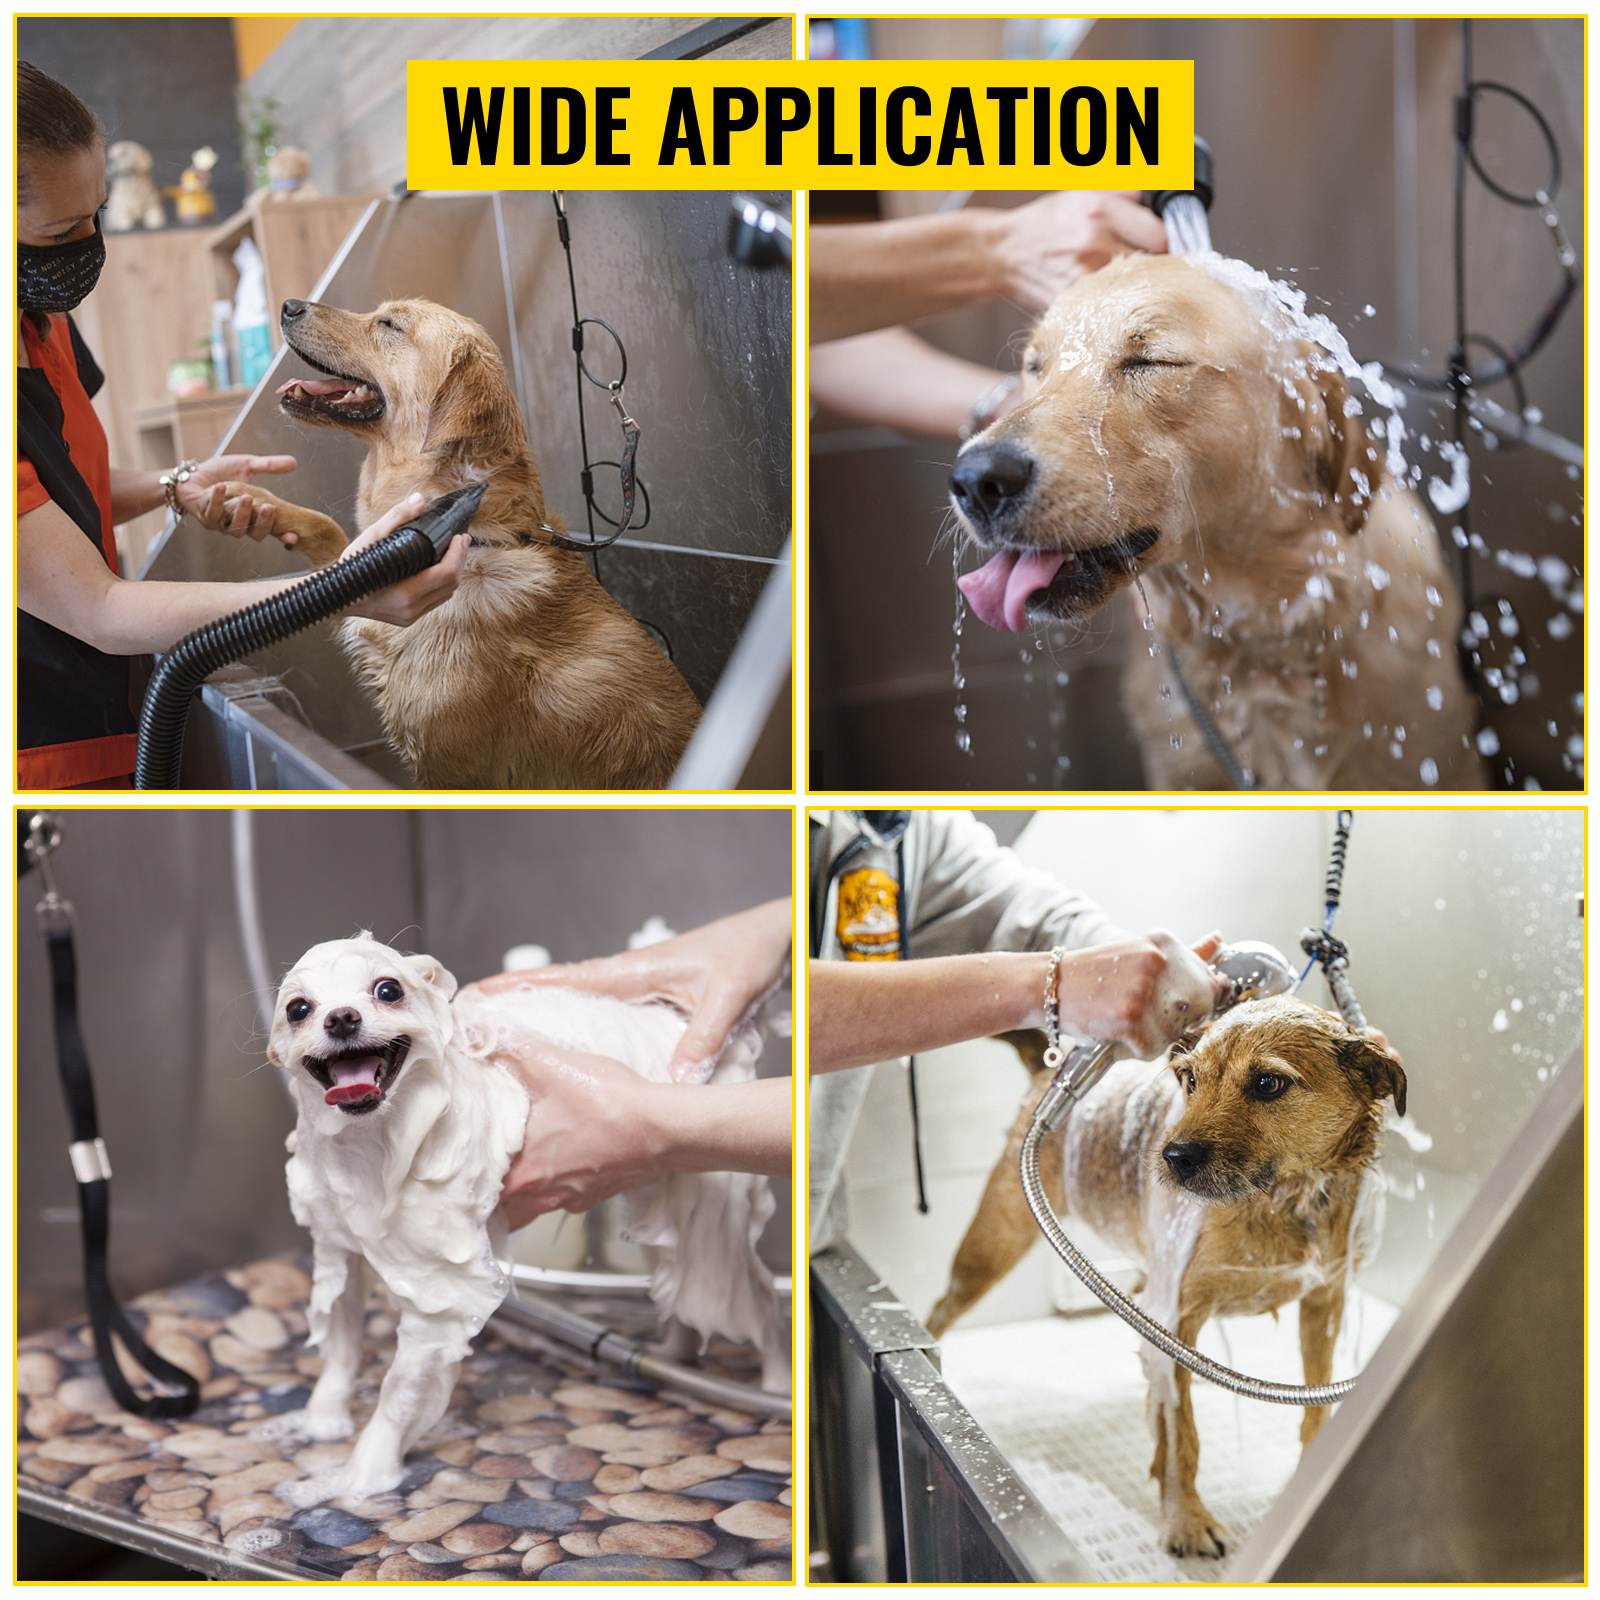 VEVOR VEVOR - Bañera de aseo para mascotas de 34 pulgadas, estación de  lavado de acero inoxidable para perros, estación de lavado para mascotas y bañera  para perros, bañera de aseo resistente